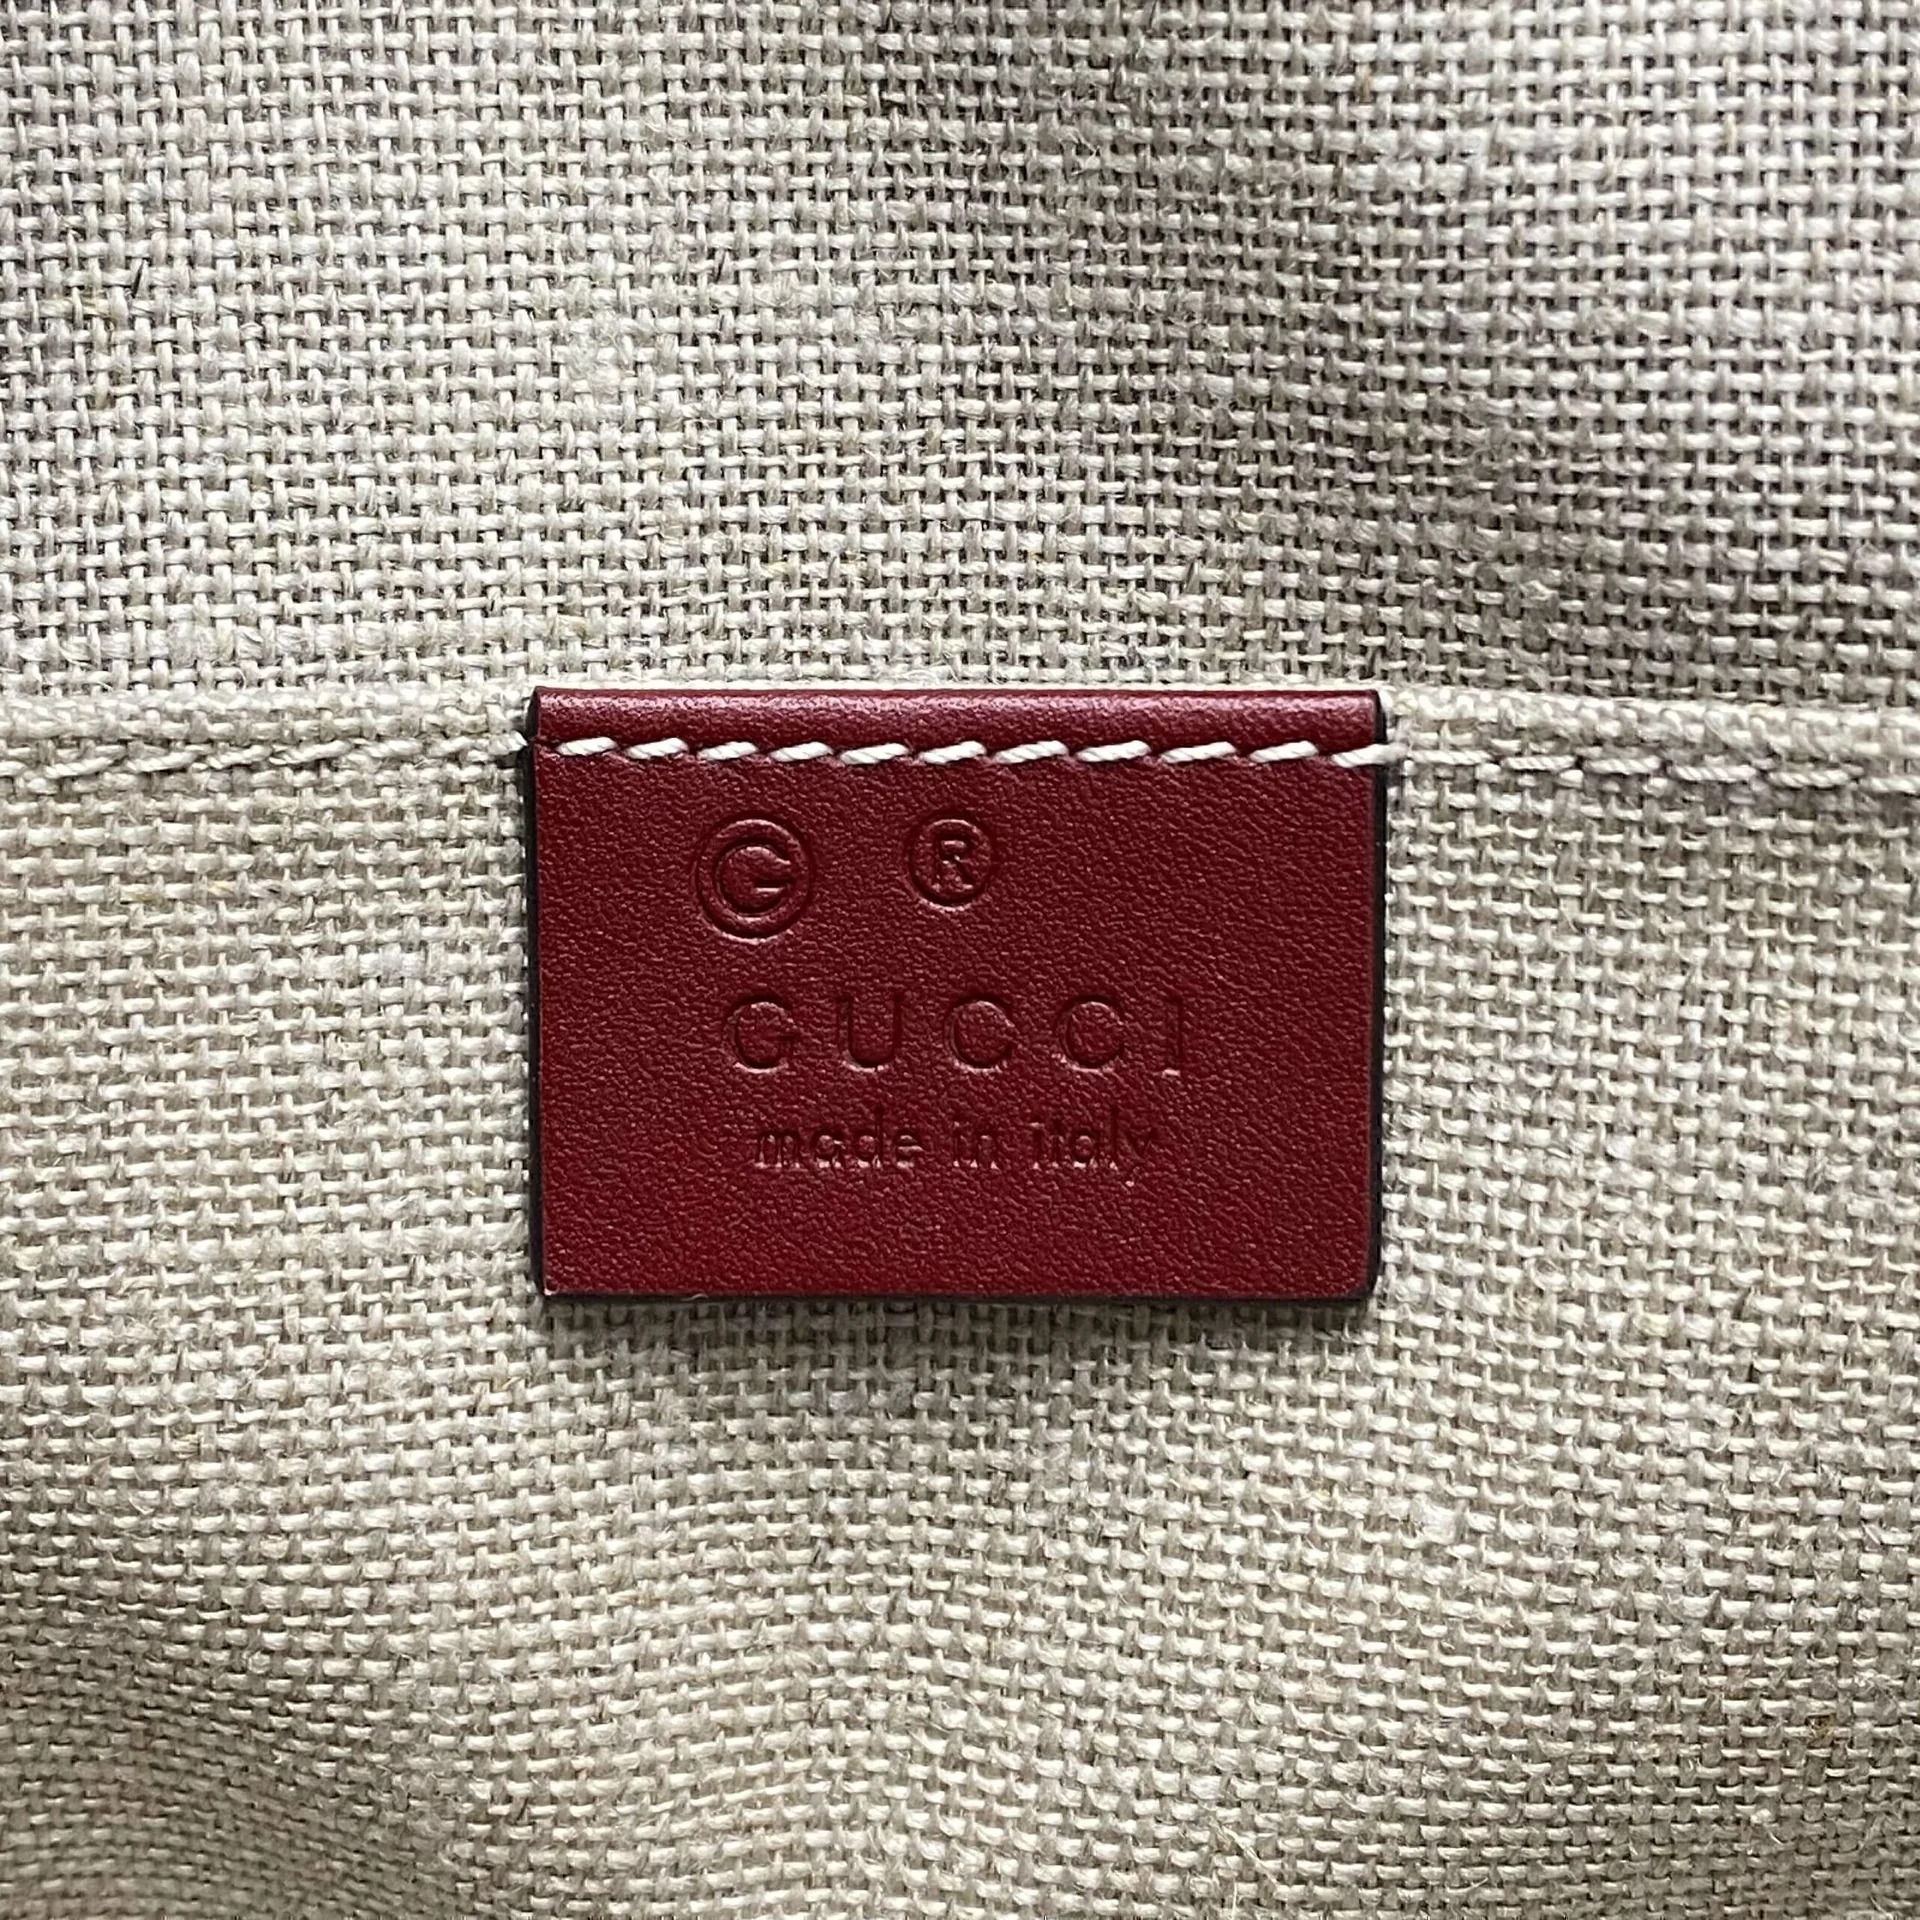 Bolsa Gucci Microguccissima Vermelha